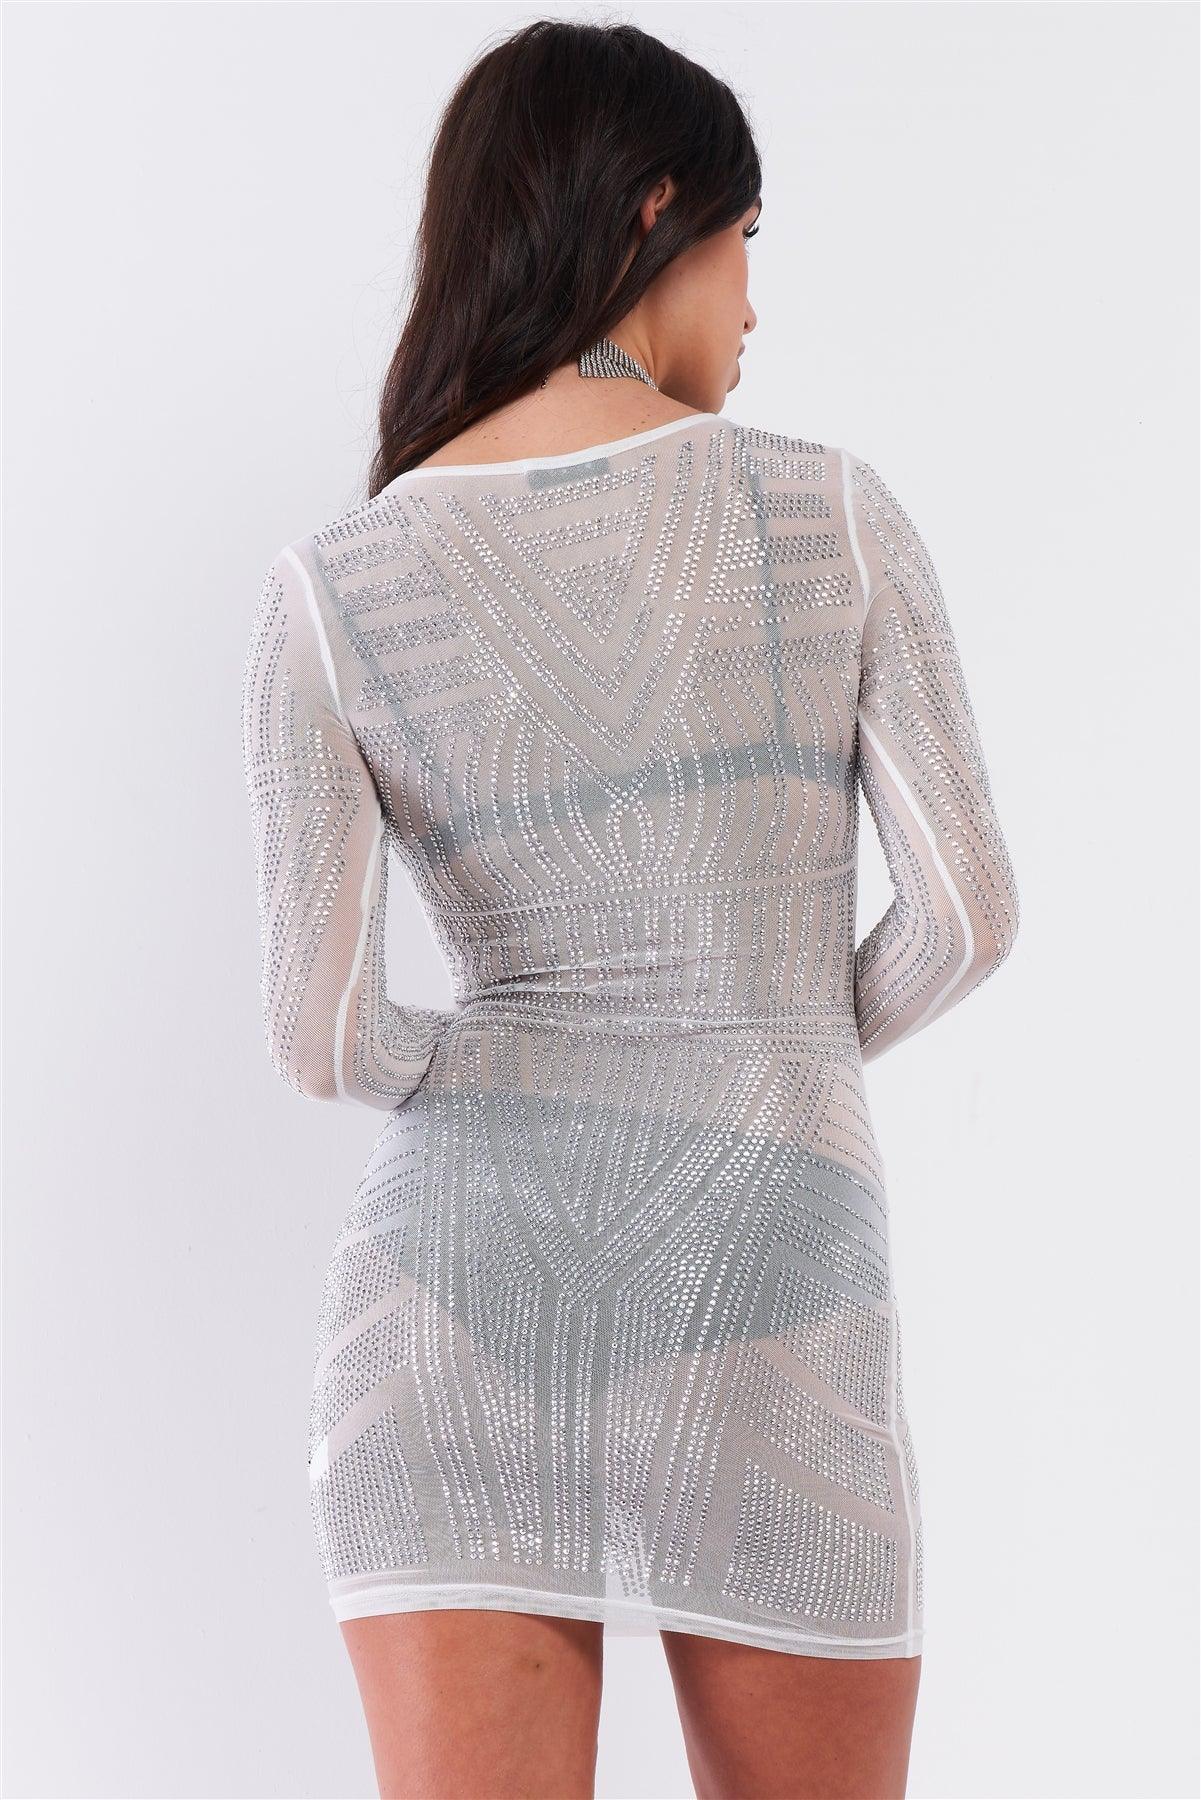 Silver Rhinestone Studded Sheer Mesh Long Sleeve Bodycon Dress /1-1-1-1